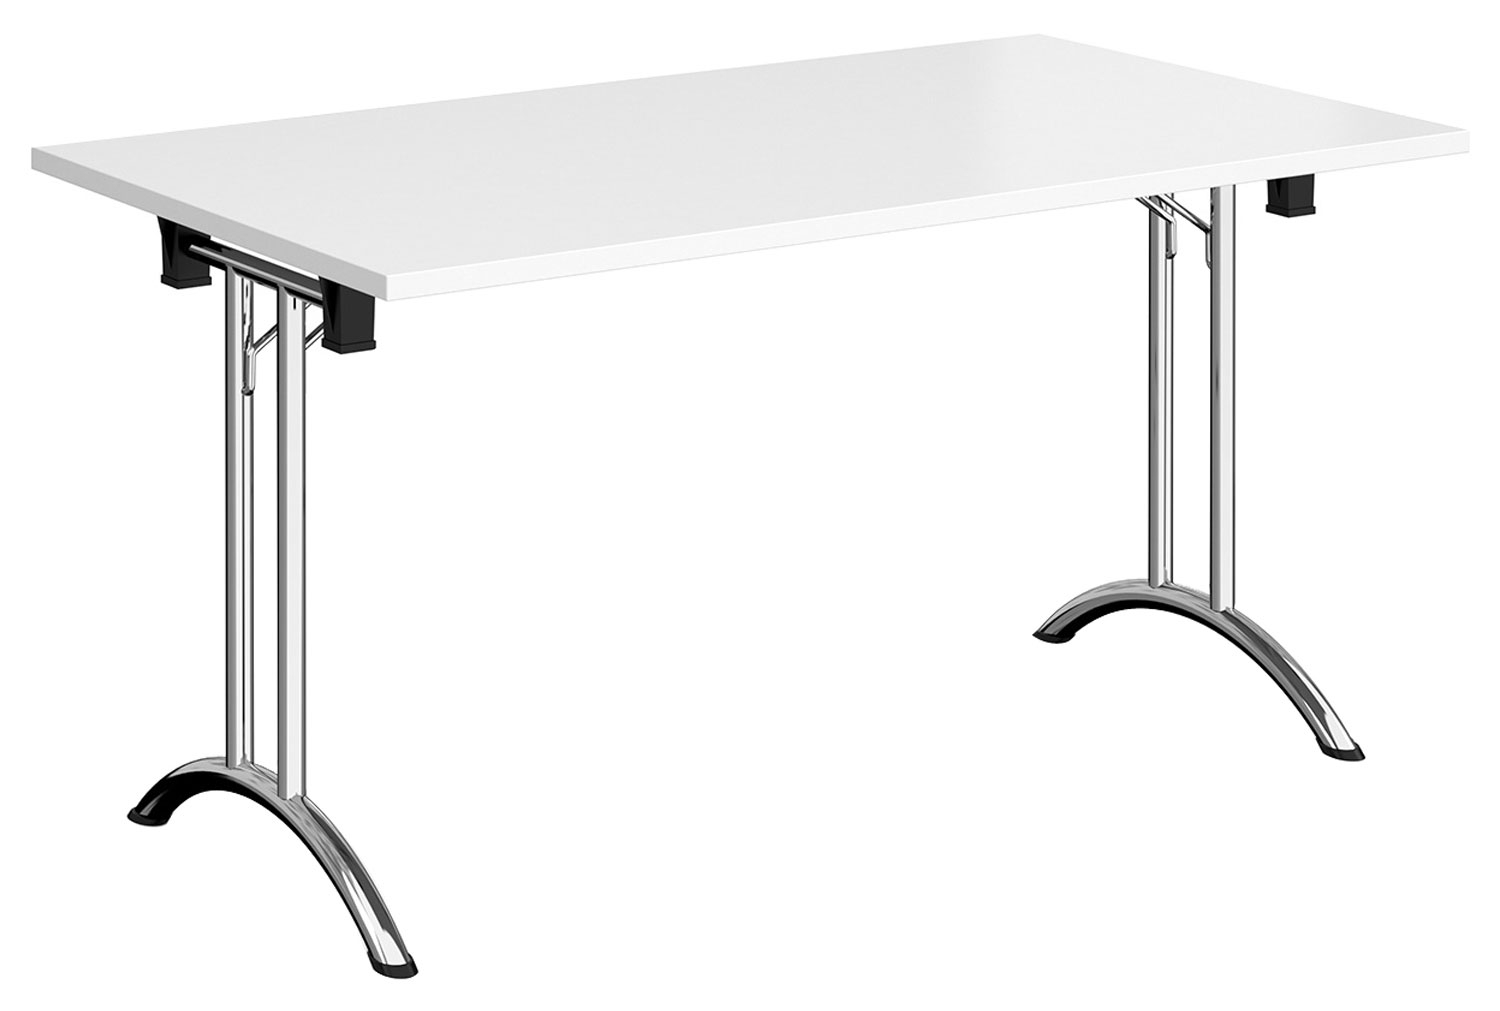 Zeeland Rectangular Folding Table, 140wx80dx73h (cm), Chrome Frame, White, Express Delivery